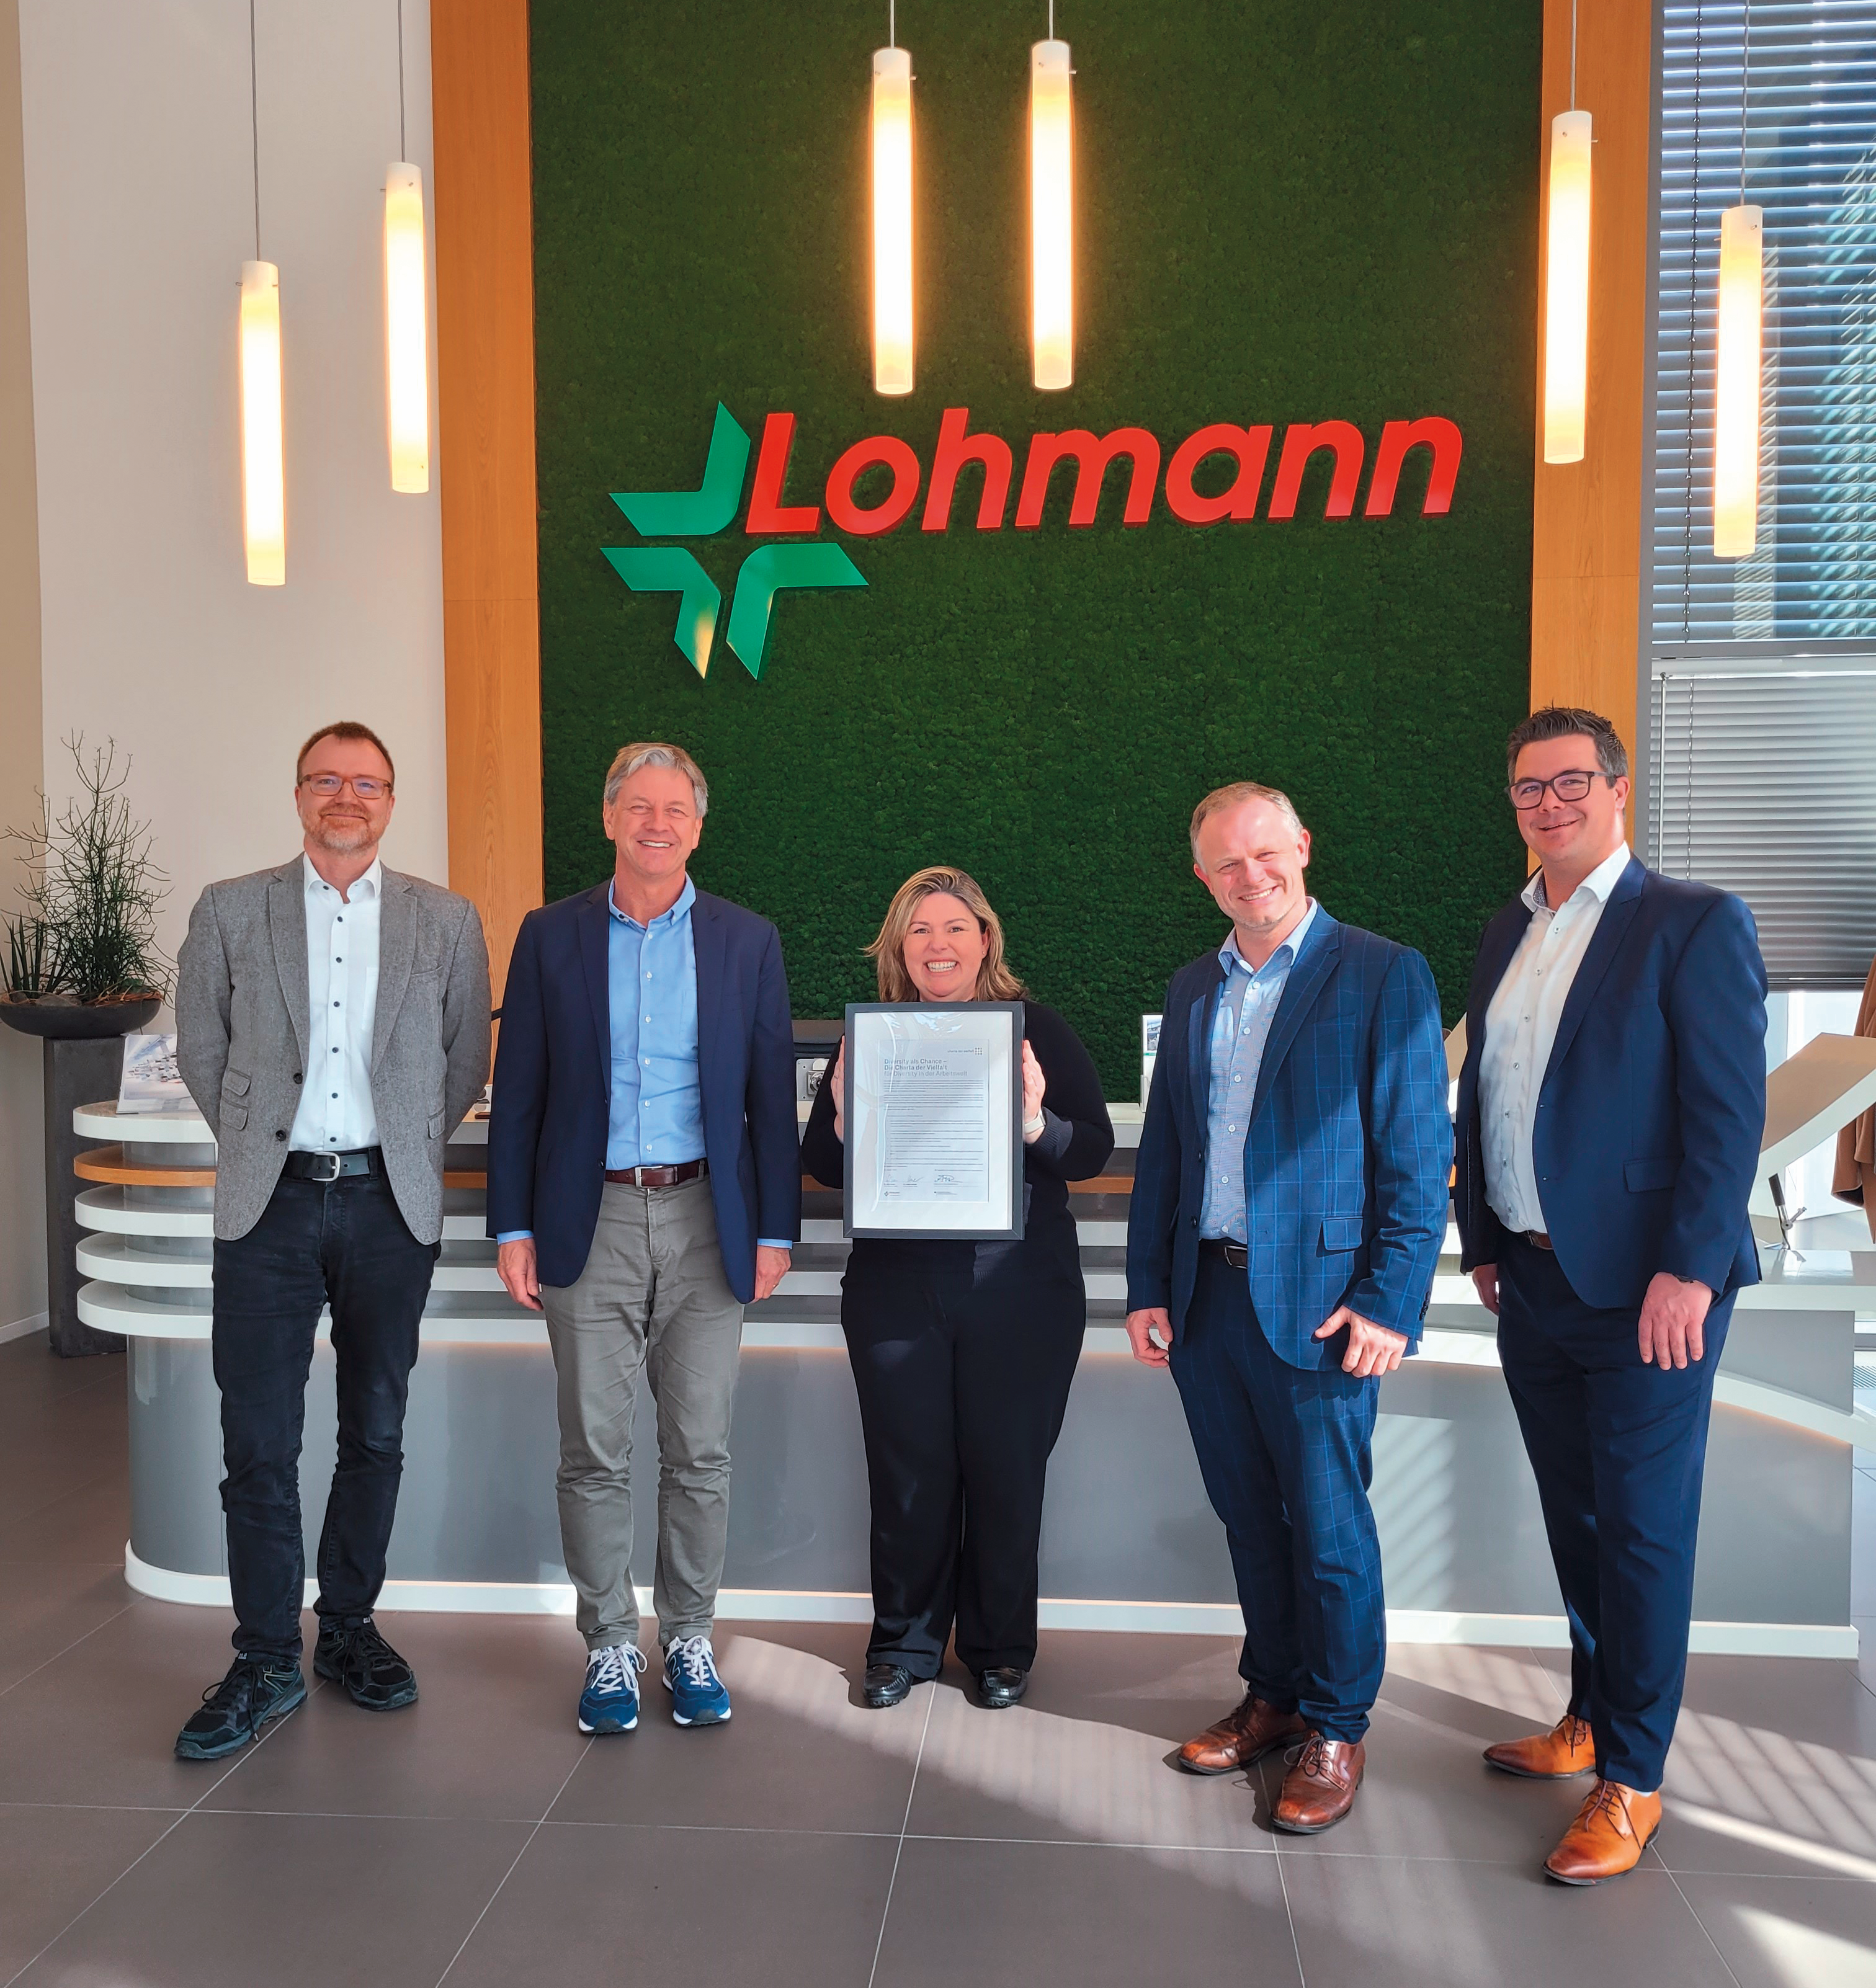 Lohmann signs the Diversity Charter 